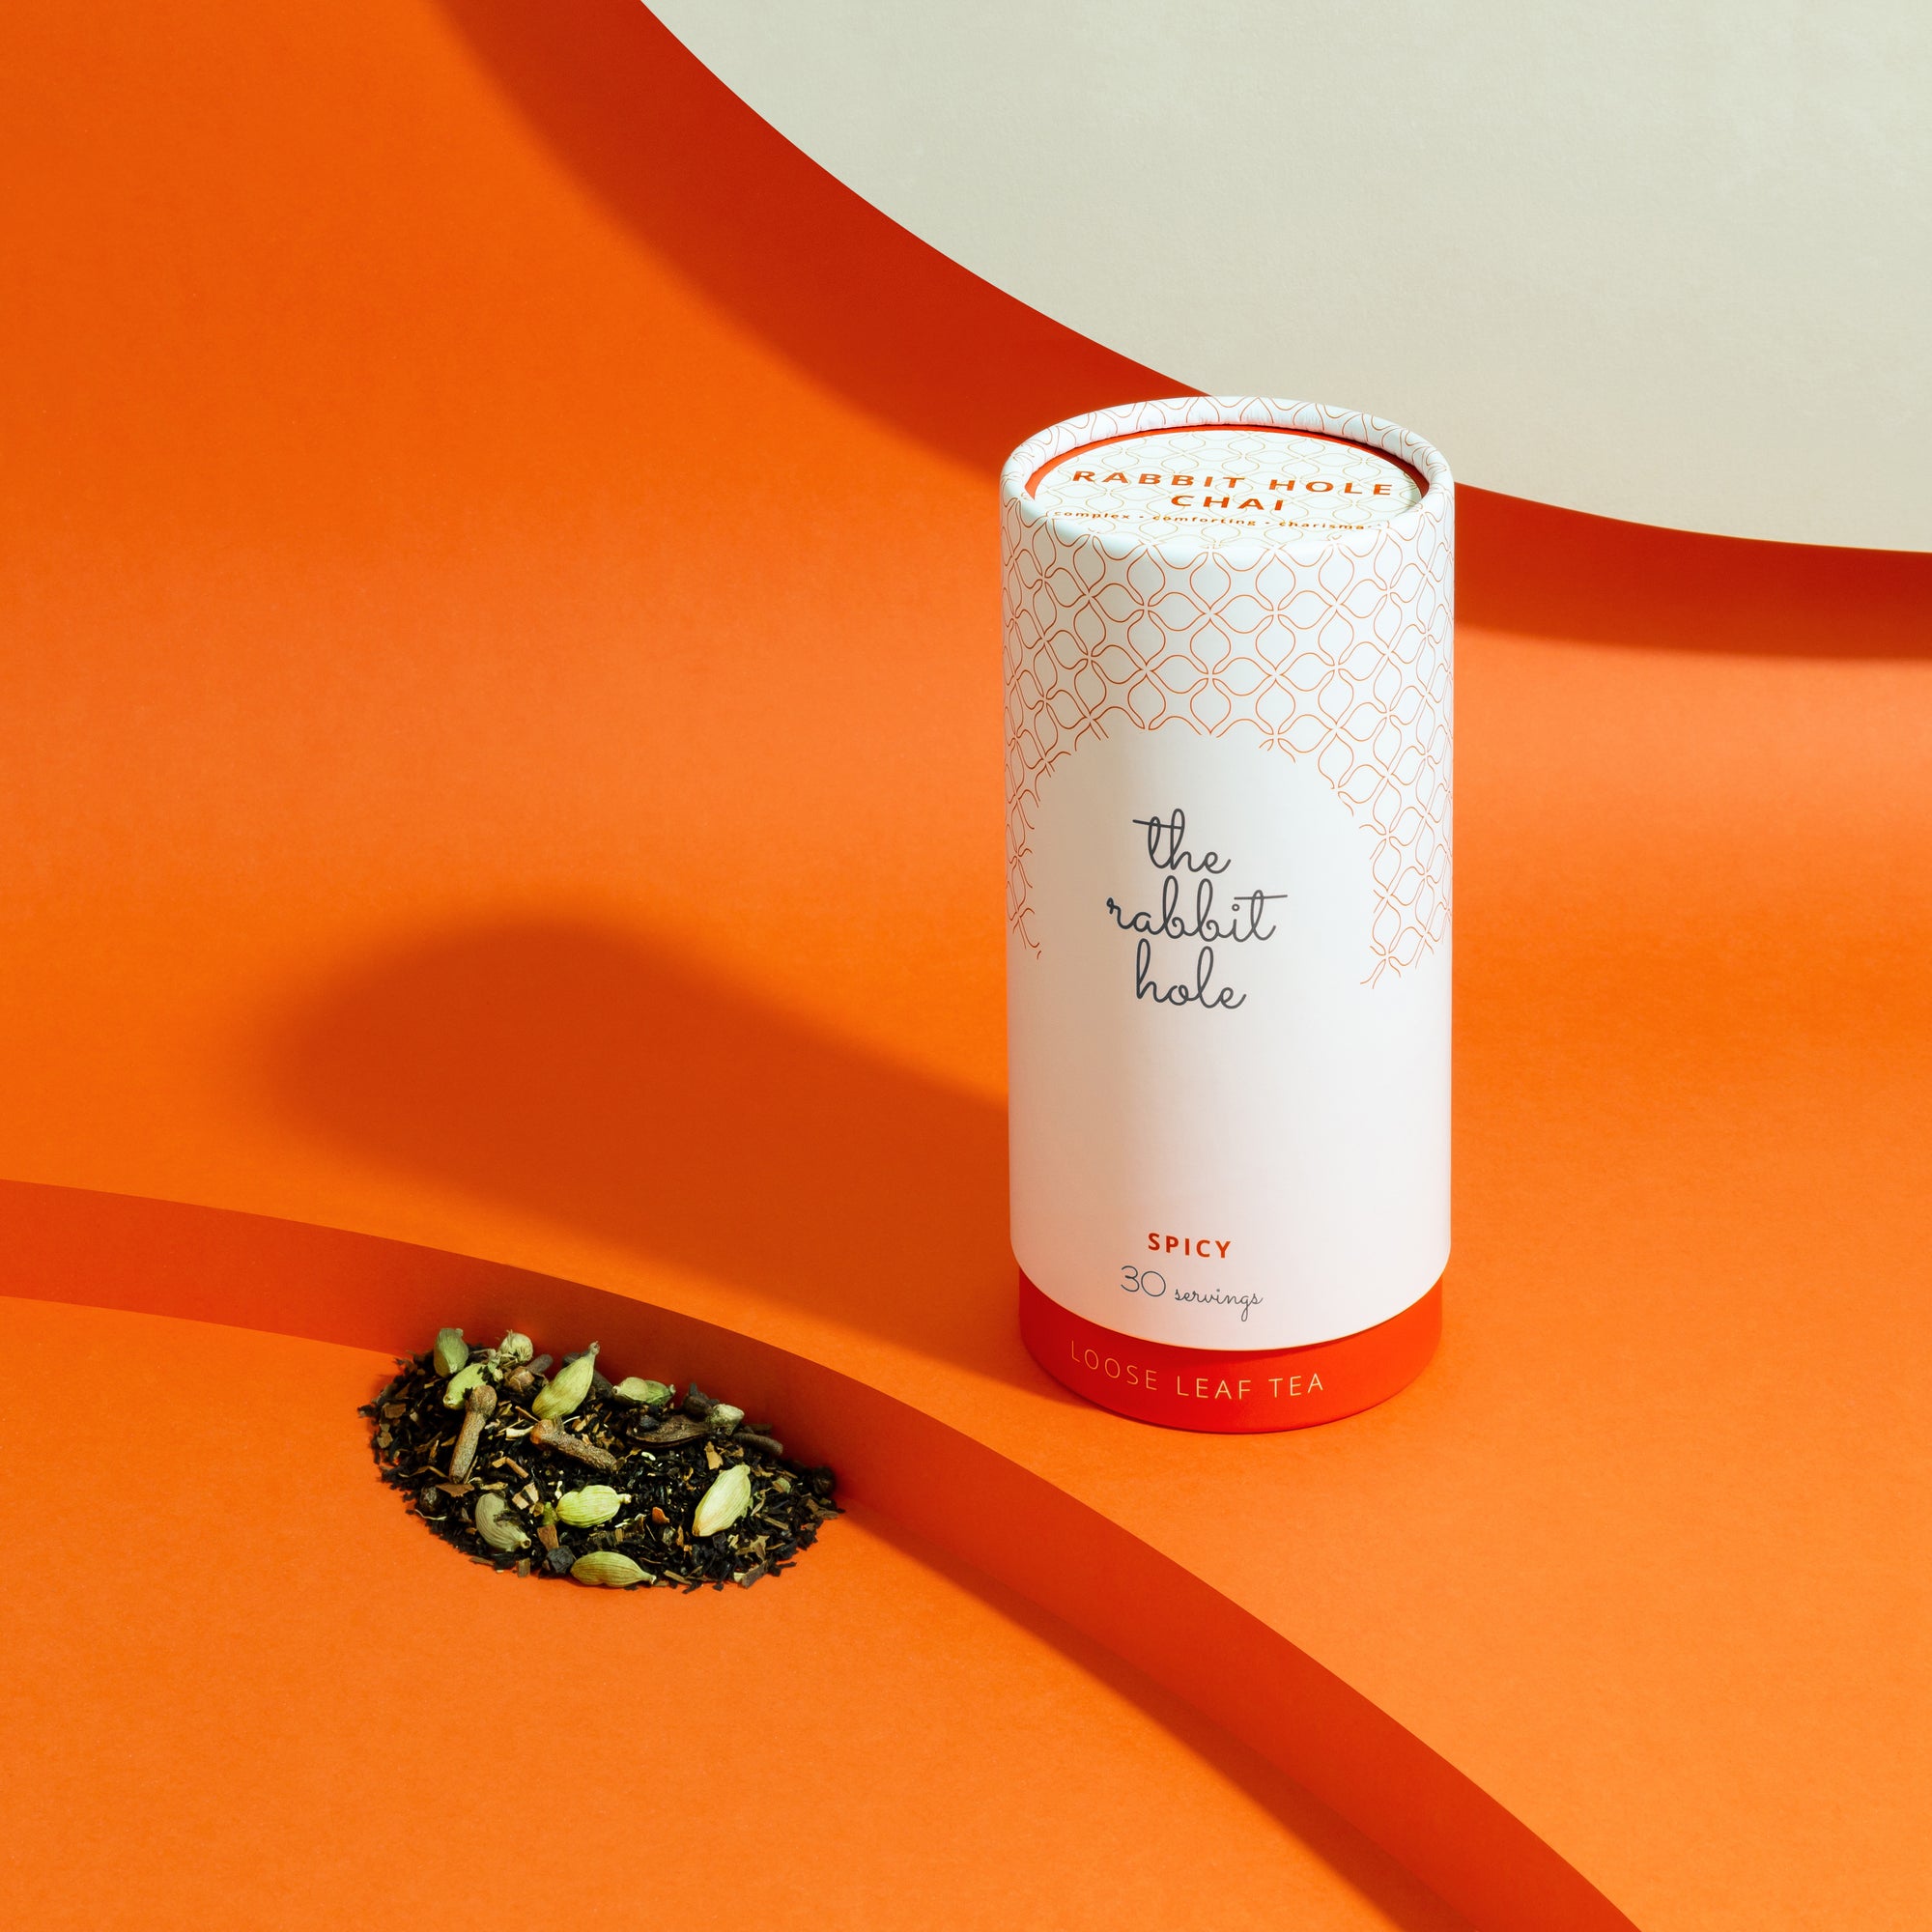 Rabbit Hole Chai loose leaf tea by The Rabbit Hole - Australian Made Tea. Tea canister on colourful orange background